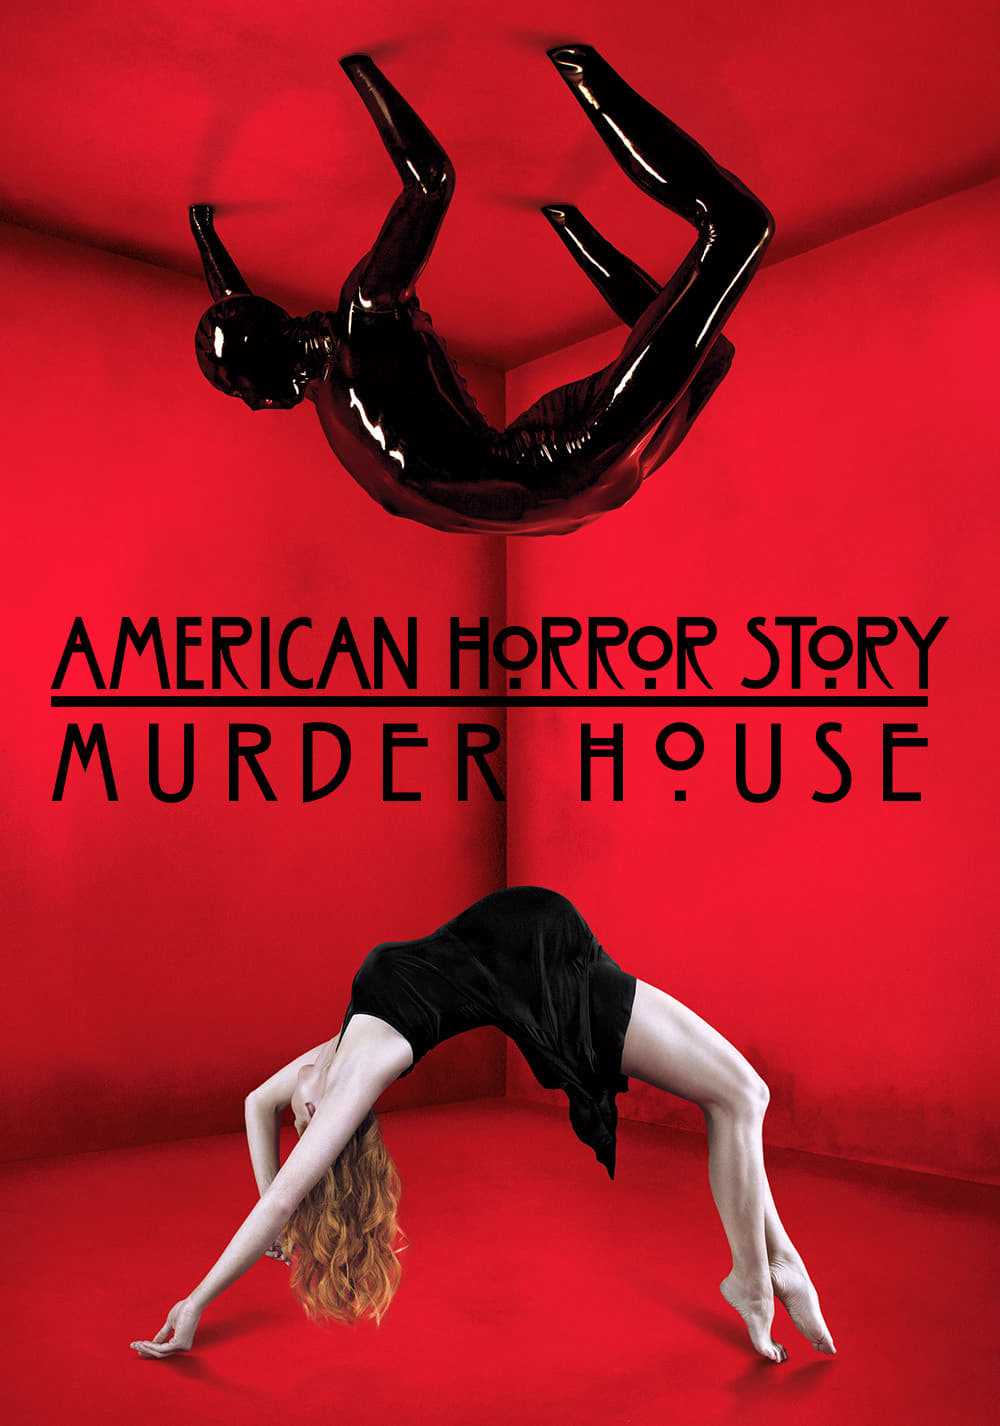 Truyện Kinh Dị Mỹ (Phần 1) - American Horror Story (Season 1)